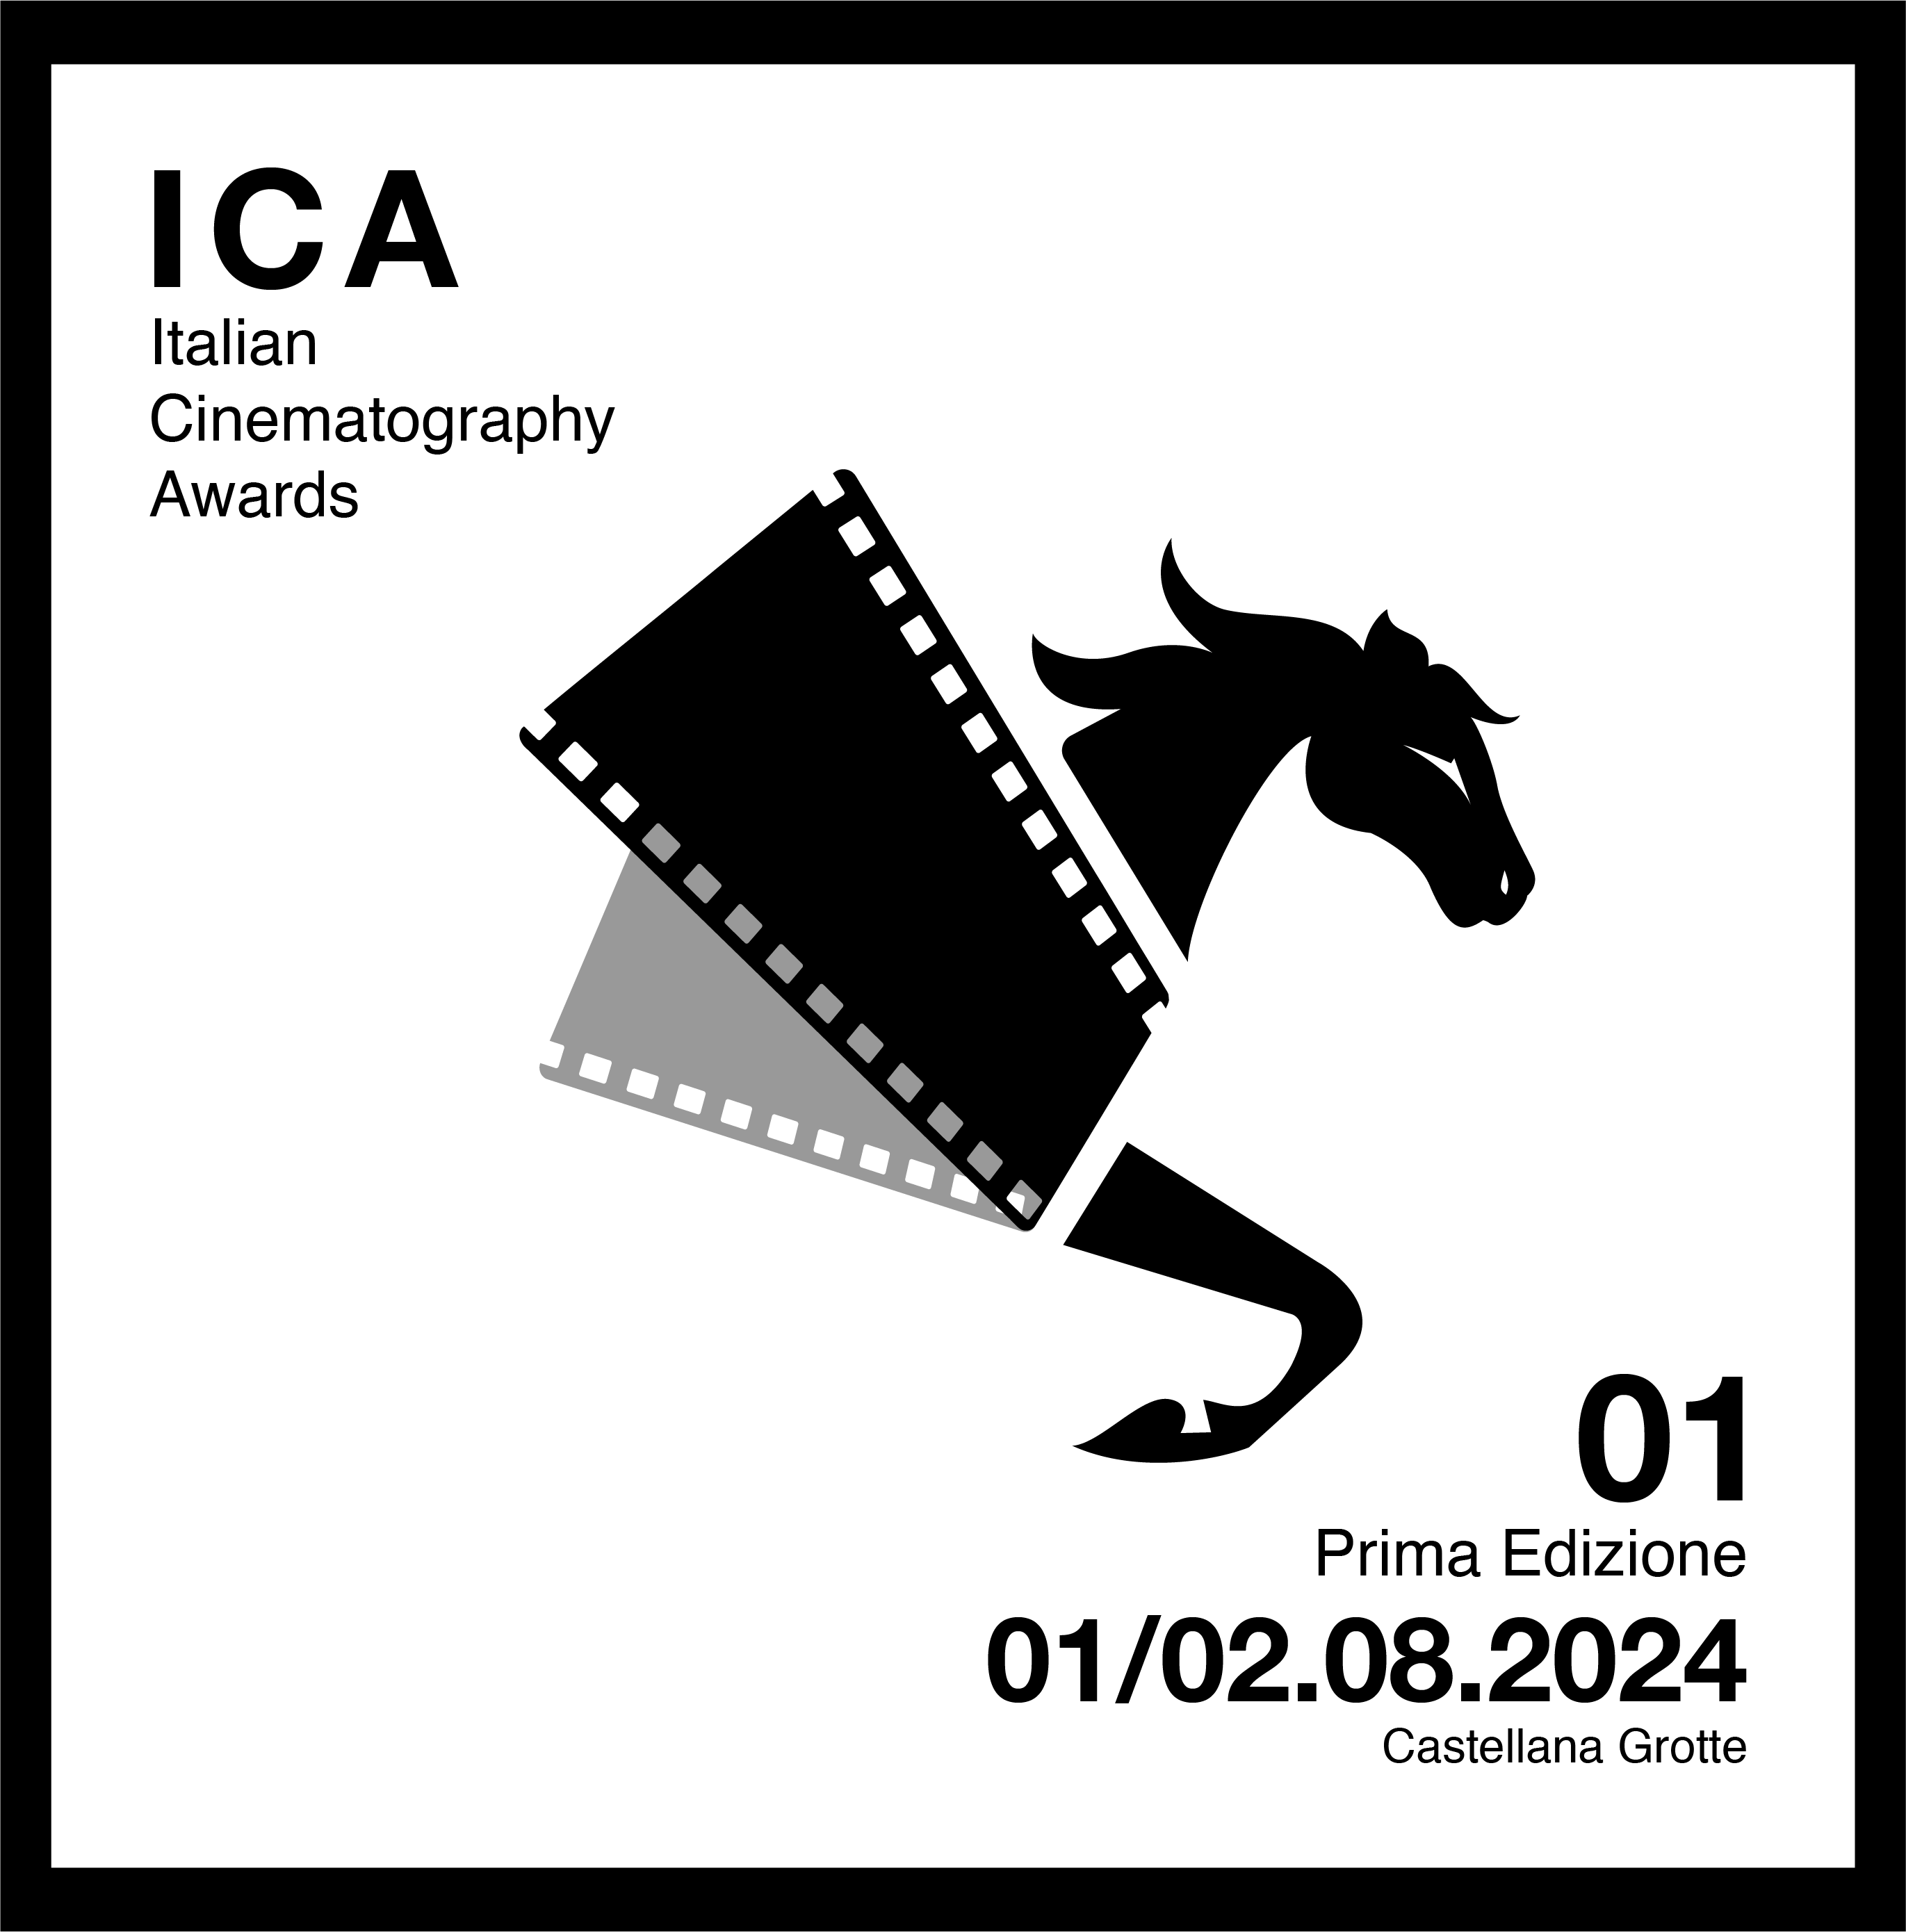 ICA – Italian Cinematography Awards